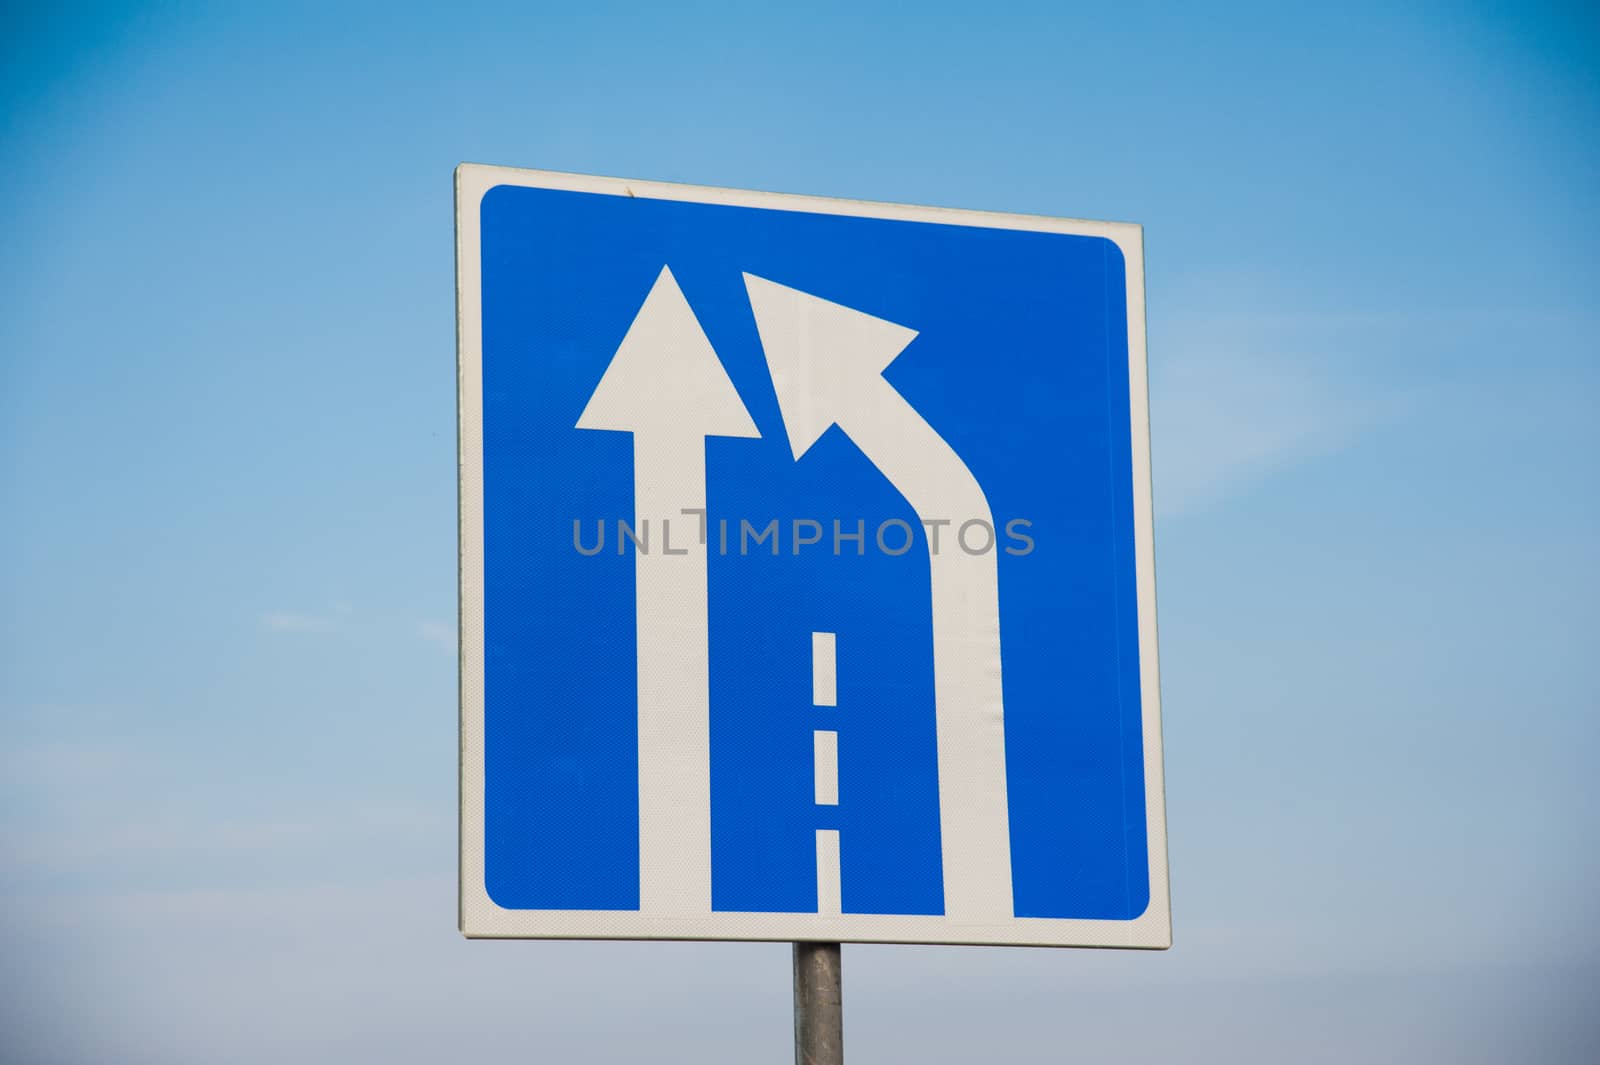 Road sign: end of lane. Road sign against a blue sky.